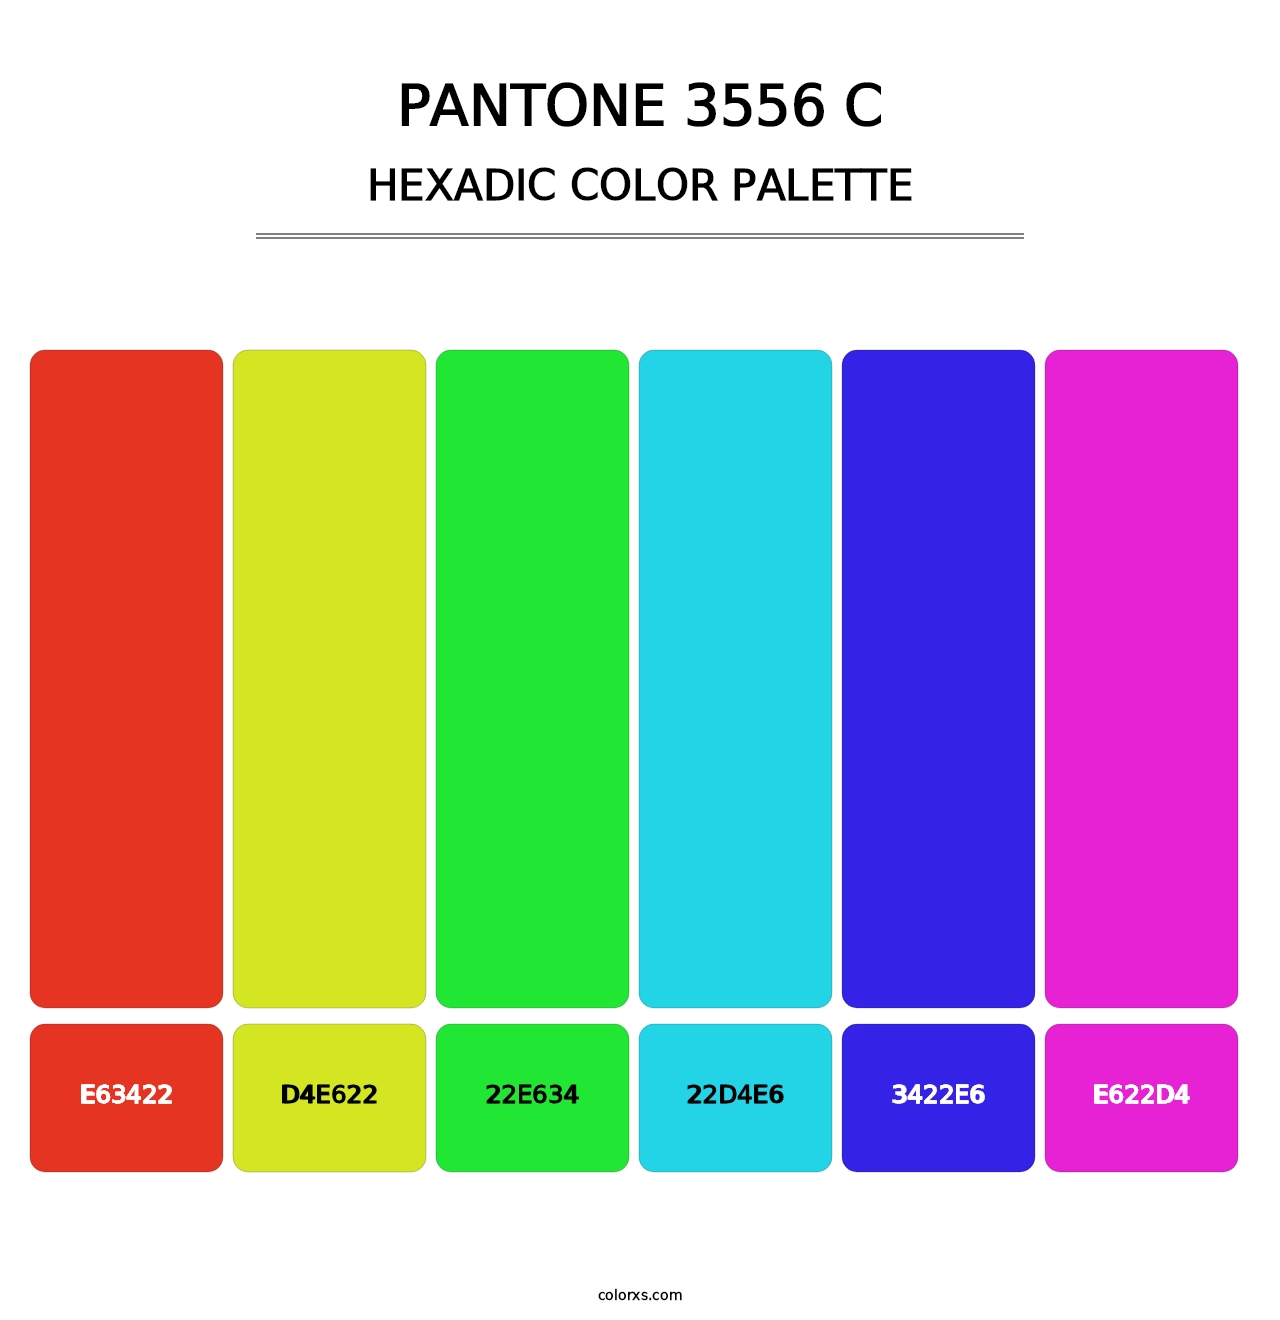 PANTONE 3556 C - Hexadic Color Palette